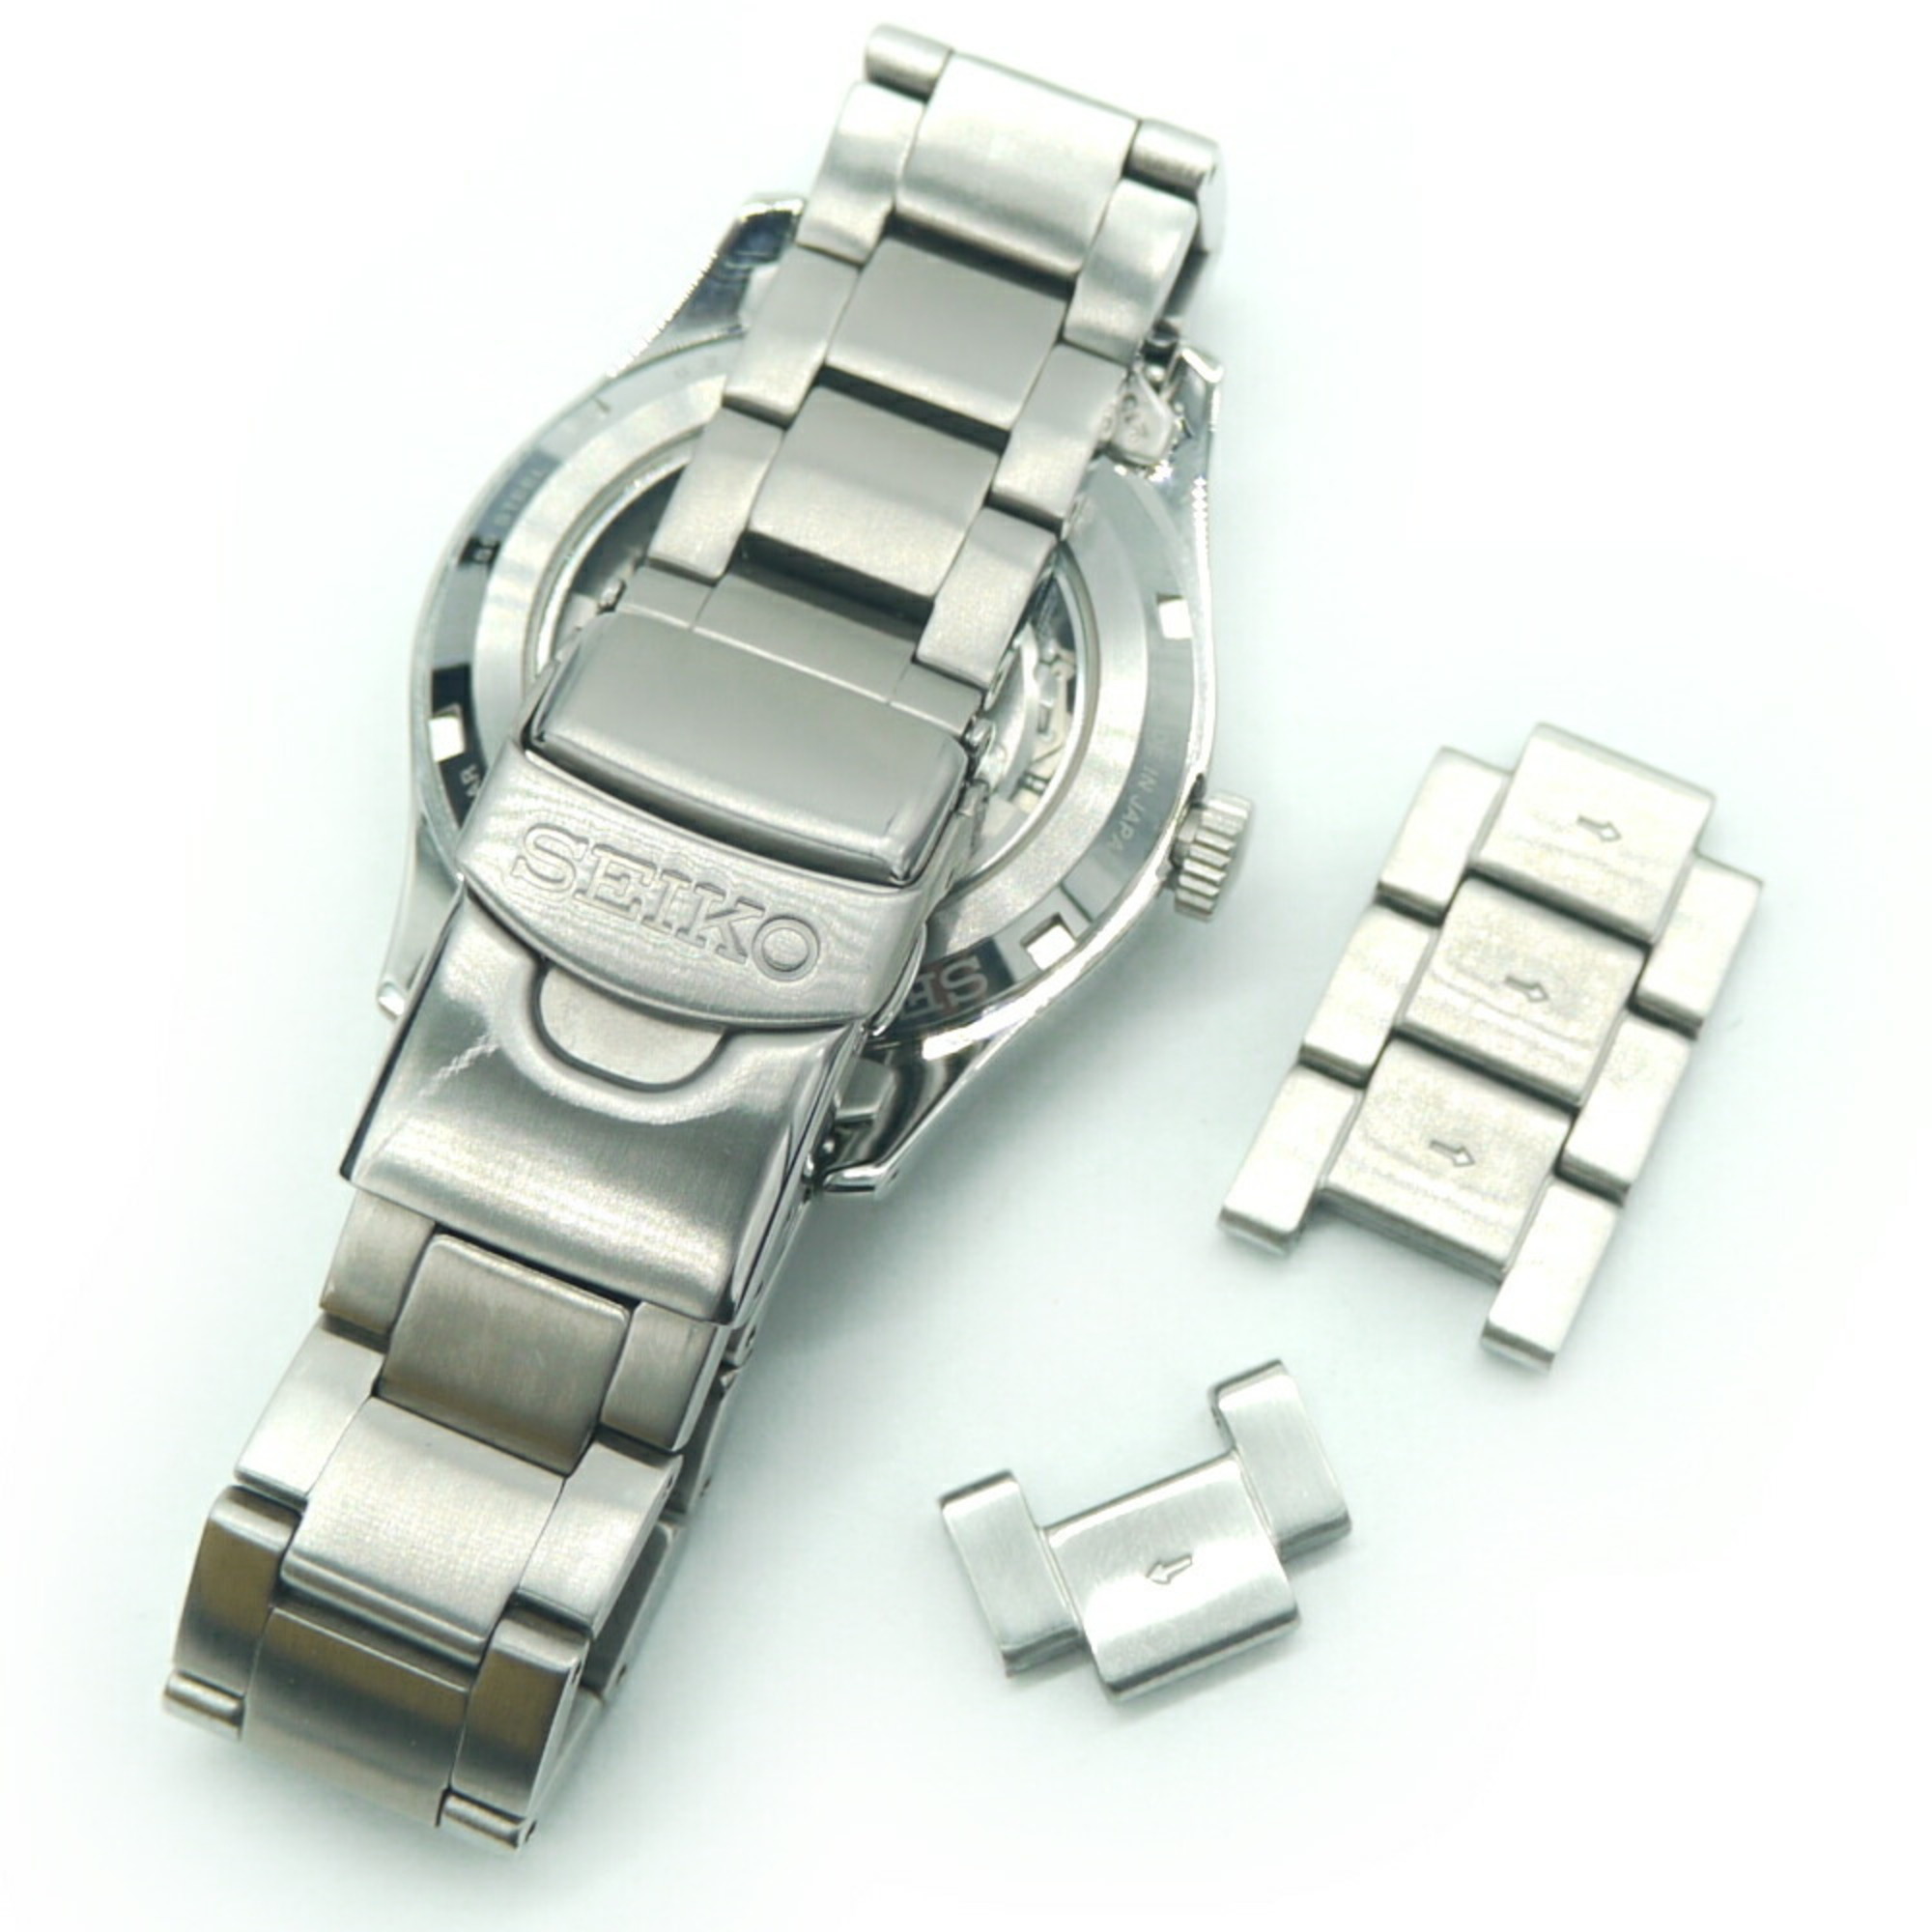 SEIKO Seiko SEIKO5 Five SBSA111 automatic winding black dial watch